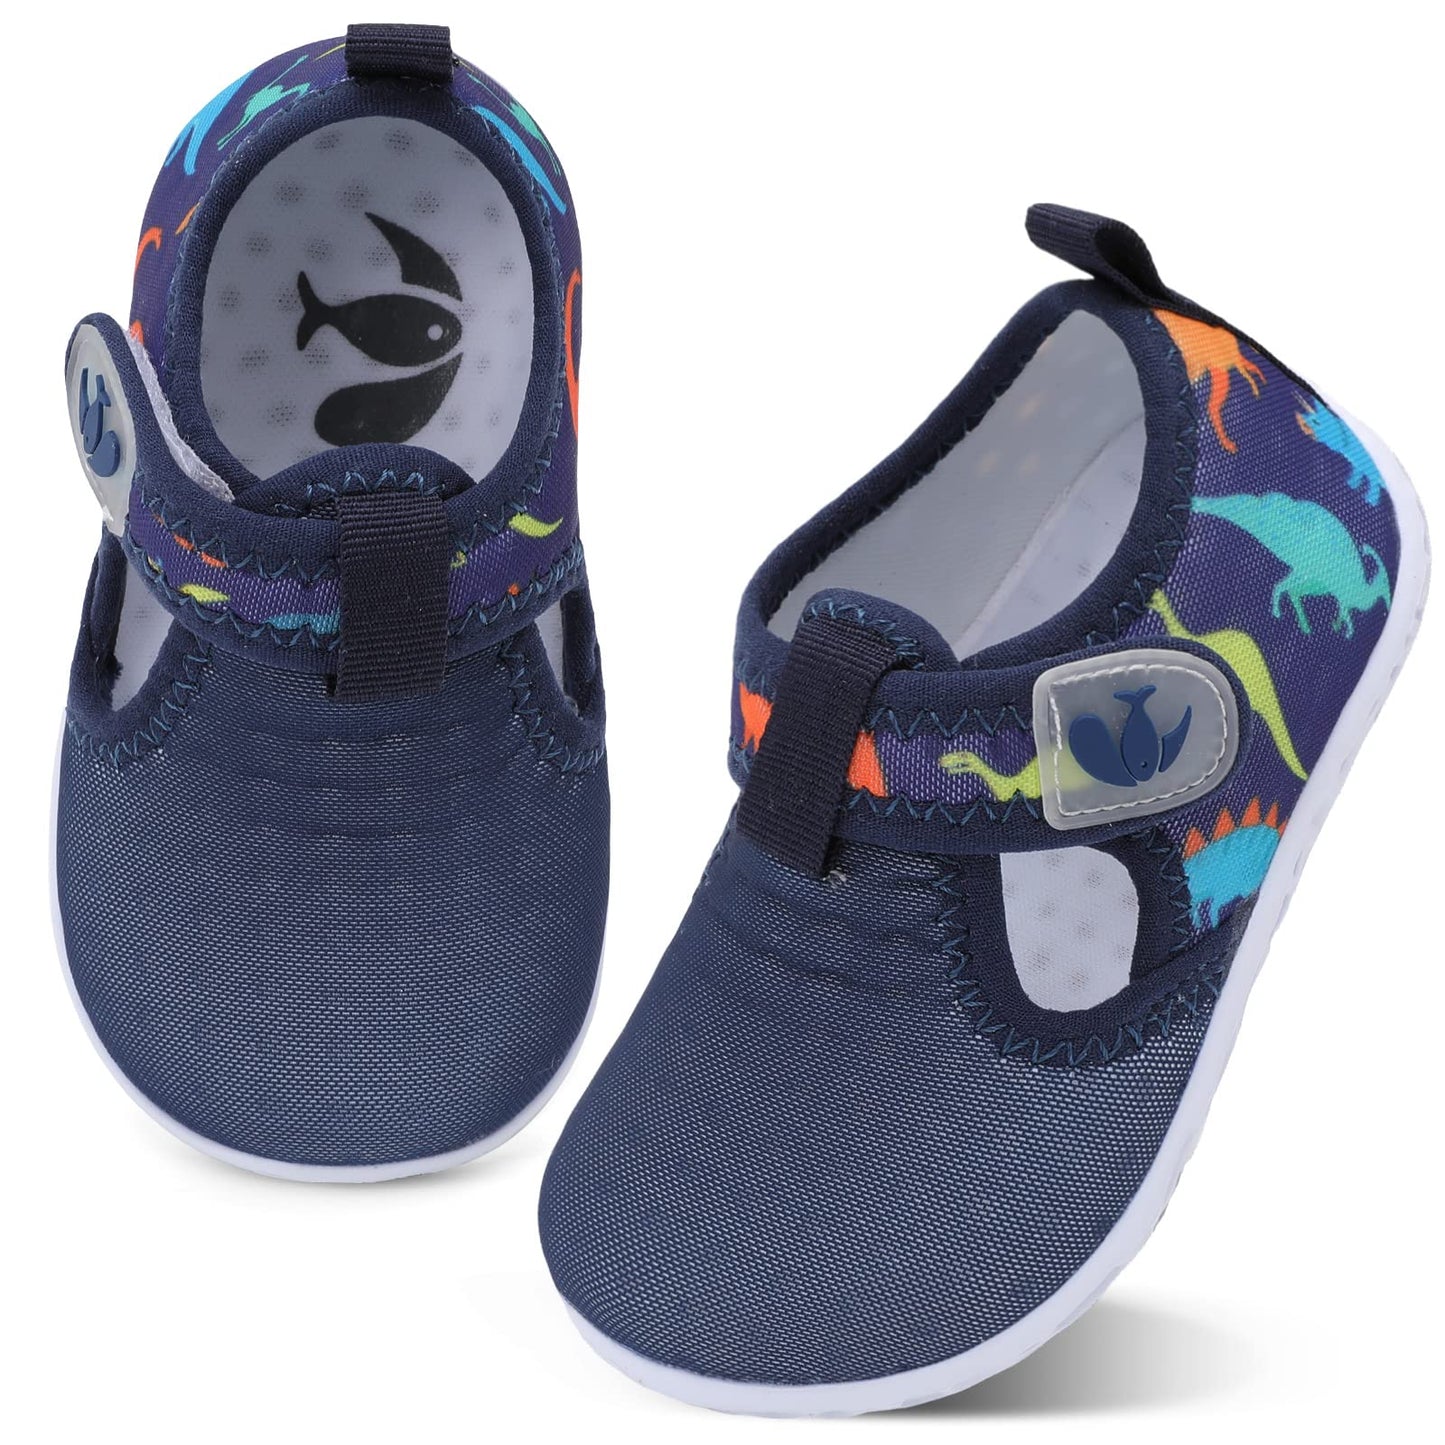 FEETCITY Baby Boys Girls Water Sport Shoes Barefoot Kids Aqua Socks Quick-Dry Beach Swim Pool Shoes